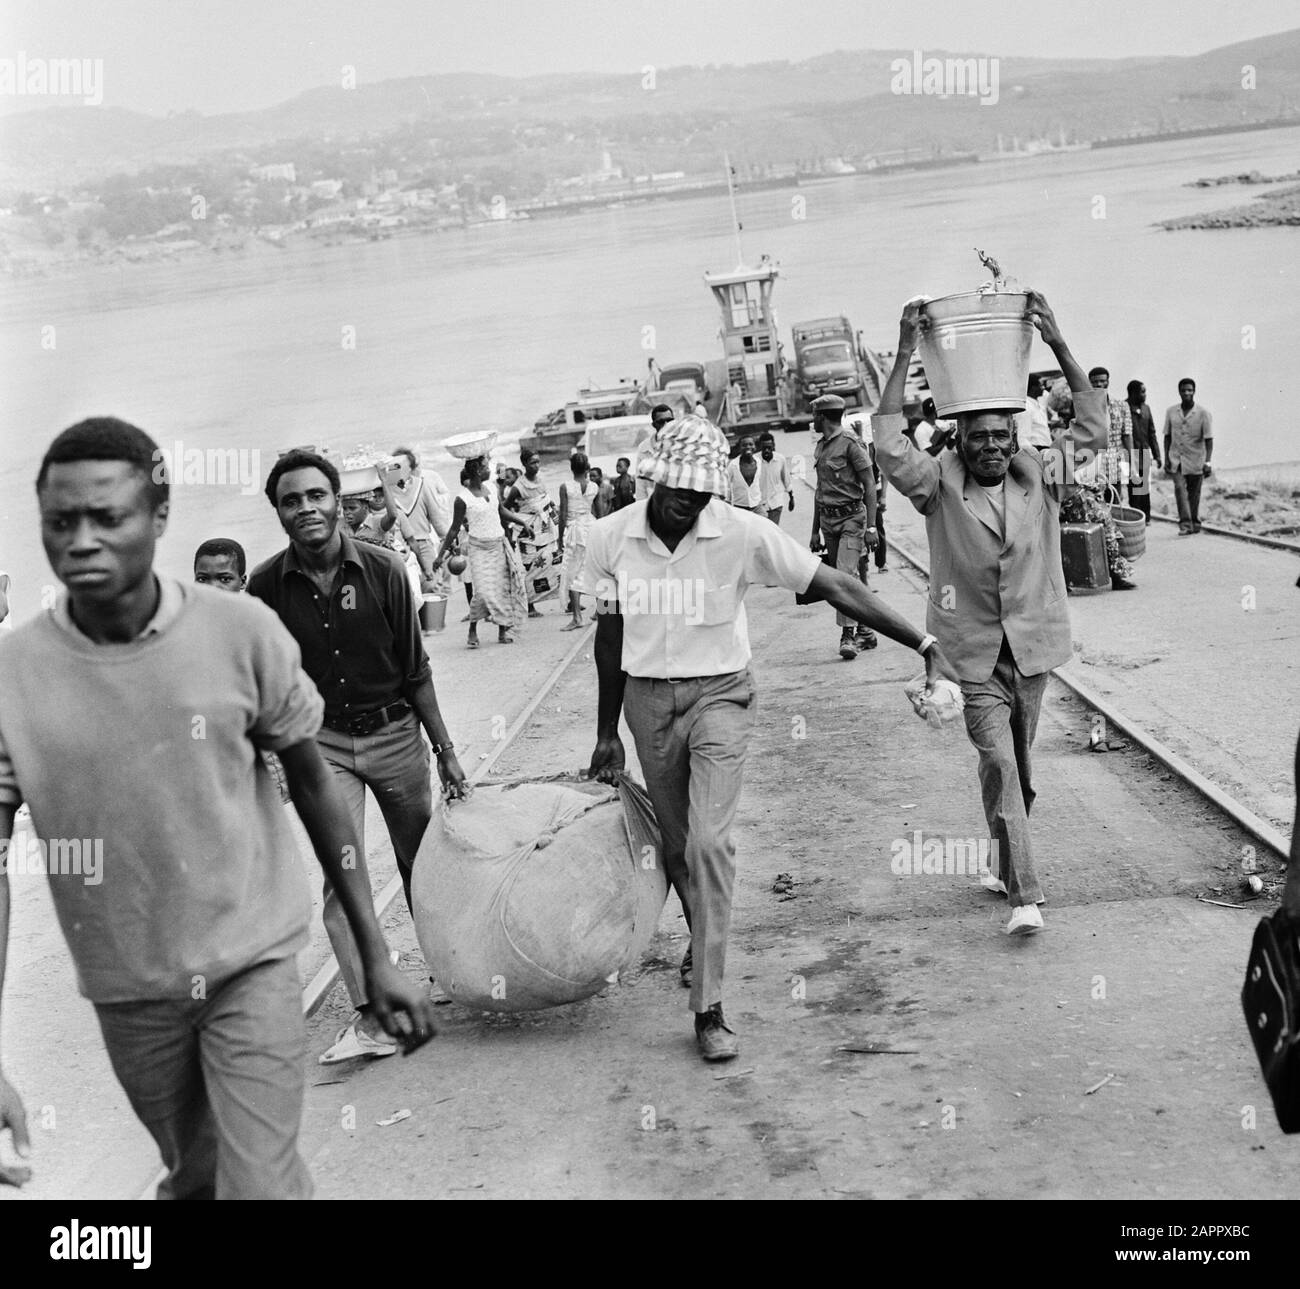 Zaire (ehemals Belgischer Kongo) Leben auf dem Land Datum: 24. Oktober 1973 Ort: Kongo, Zaire Schlüsselwörter: Männer, Transport Stockfoto